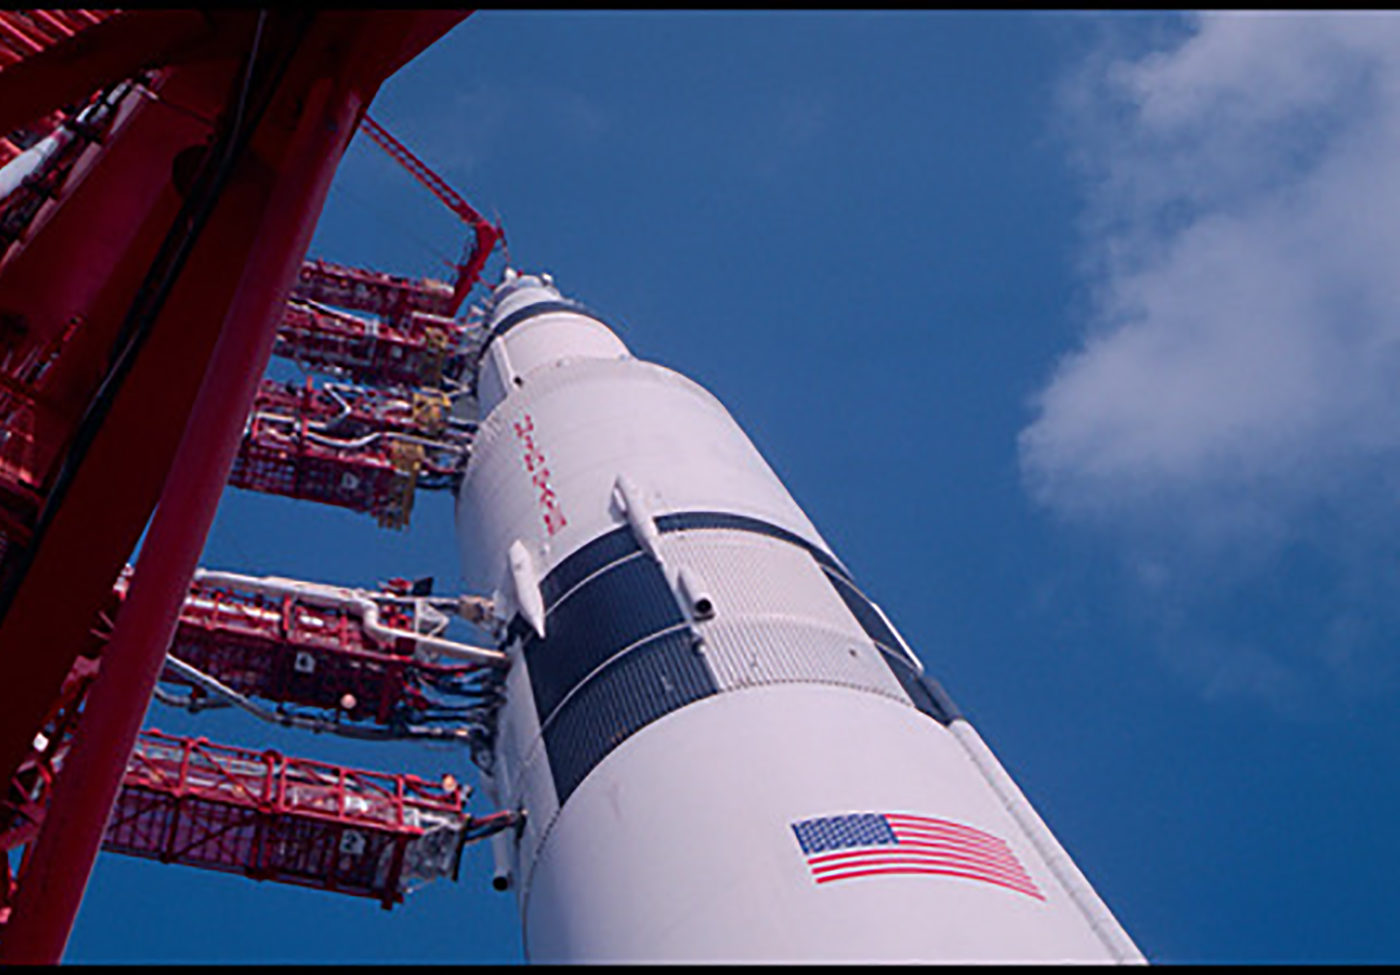 Screen capture from Apollo 11 movie.